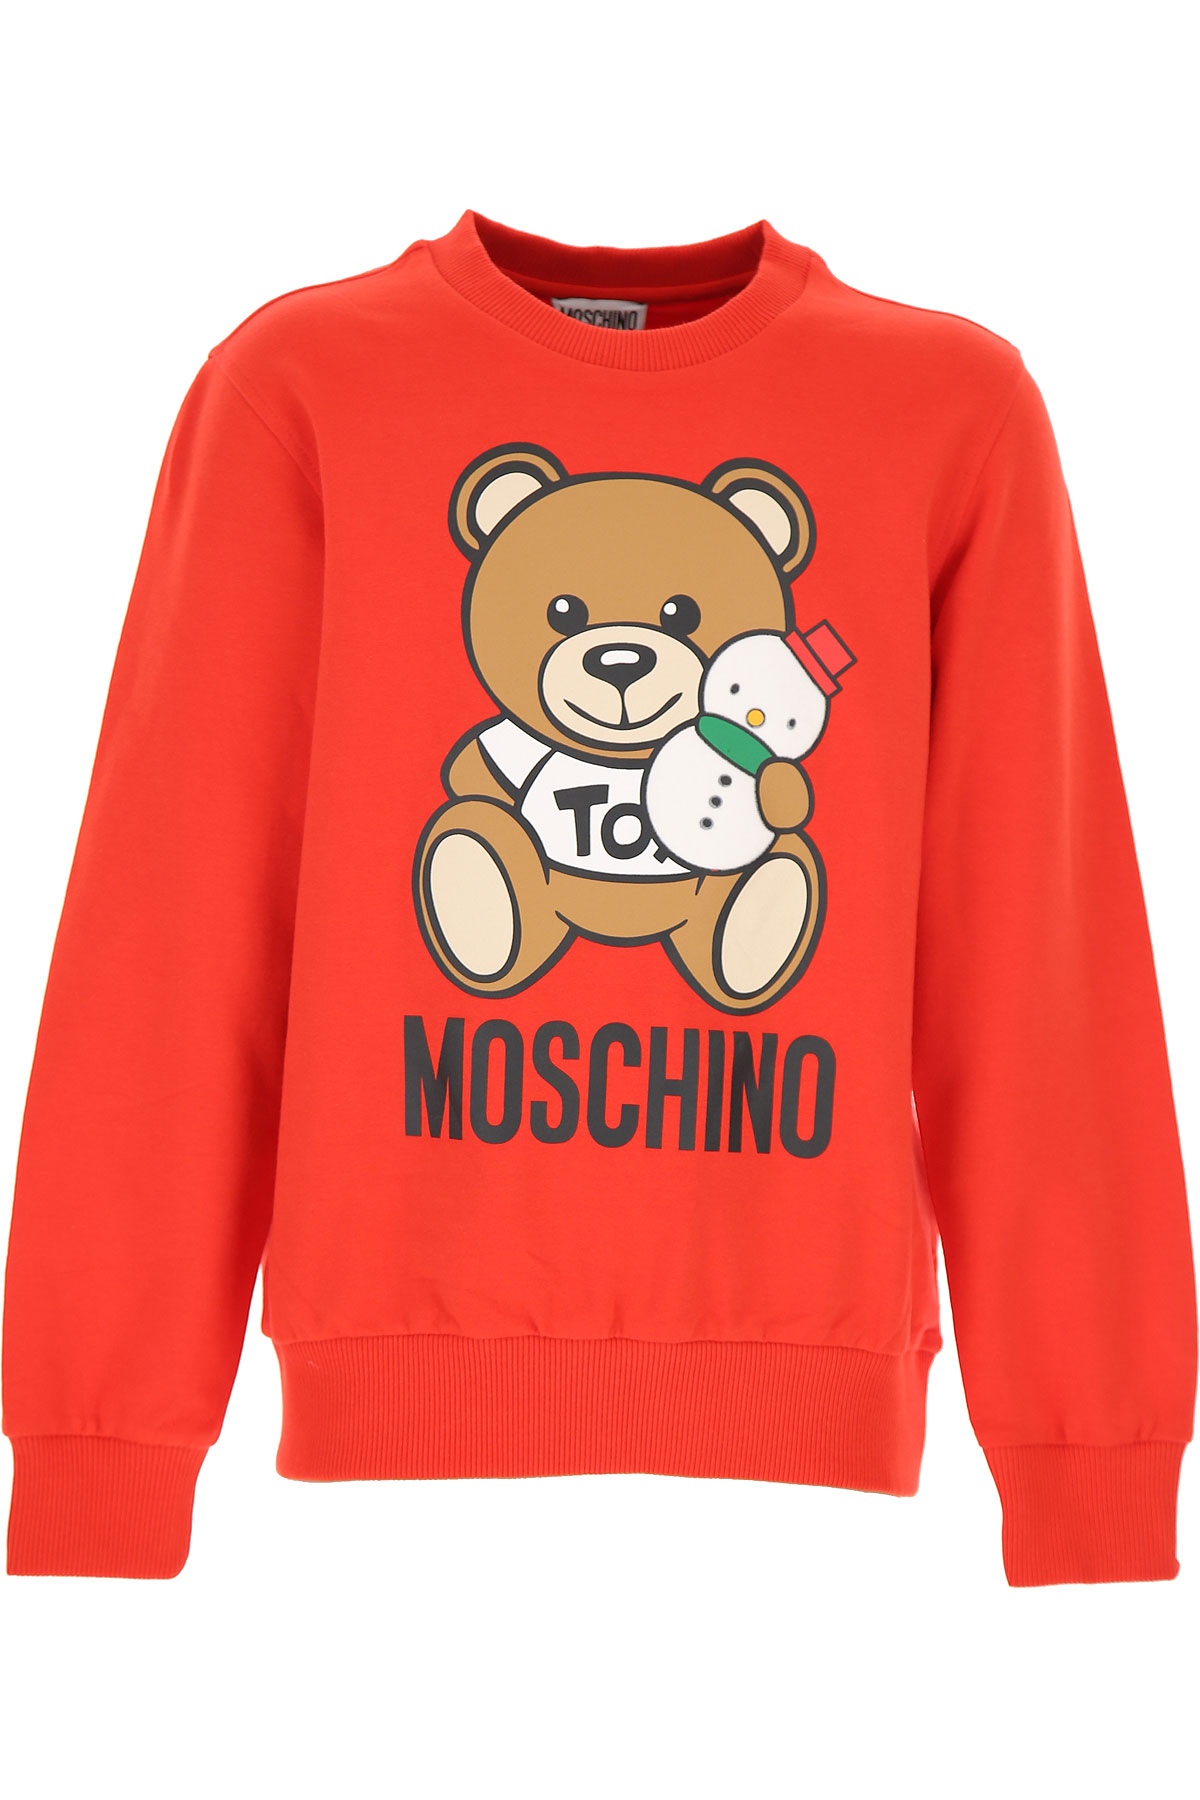 Moschino Kinder Sweatshirt & Kapuzenpullover für Jungen Günstig im Sale, Rot, Baumwolle, 2017, 10Y 12Y 4Y 5Y 6Y 8Y